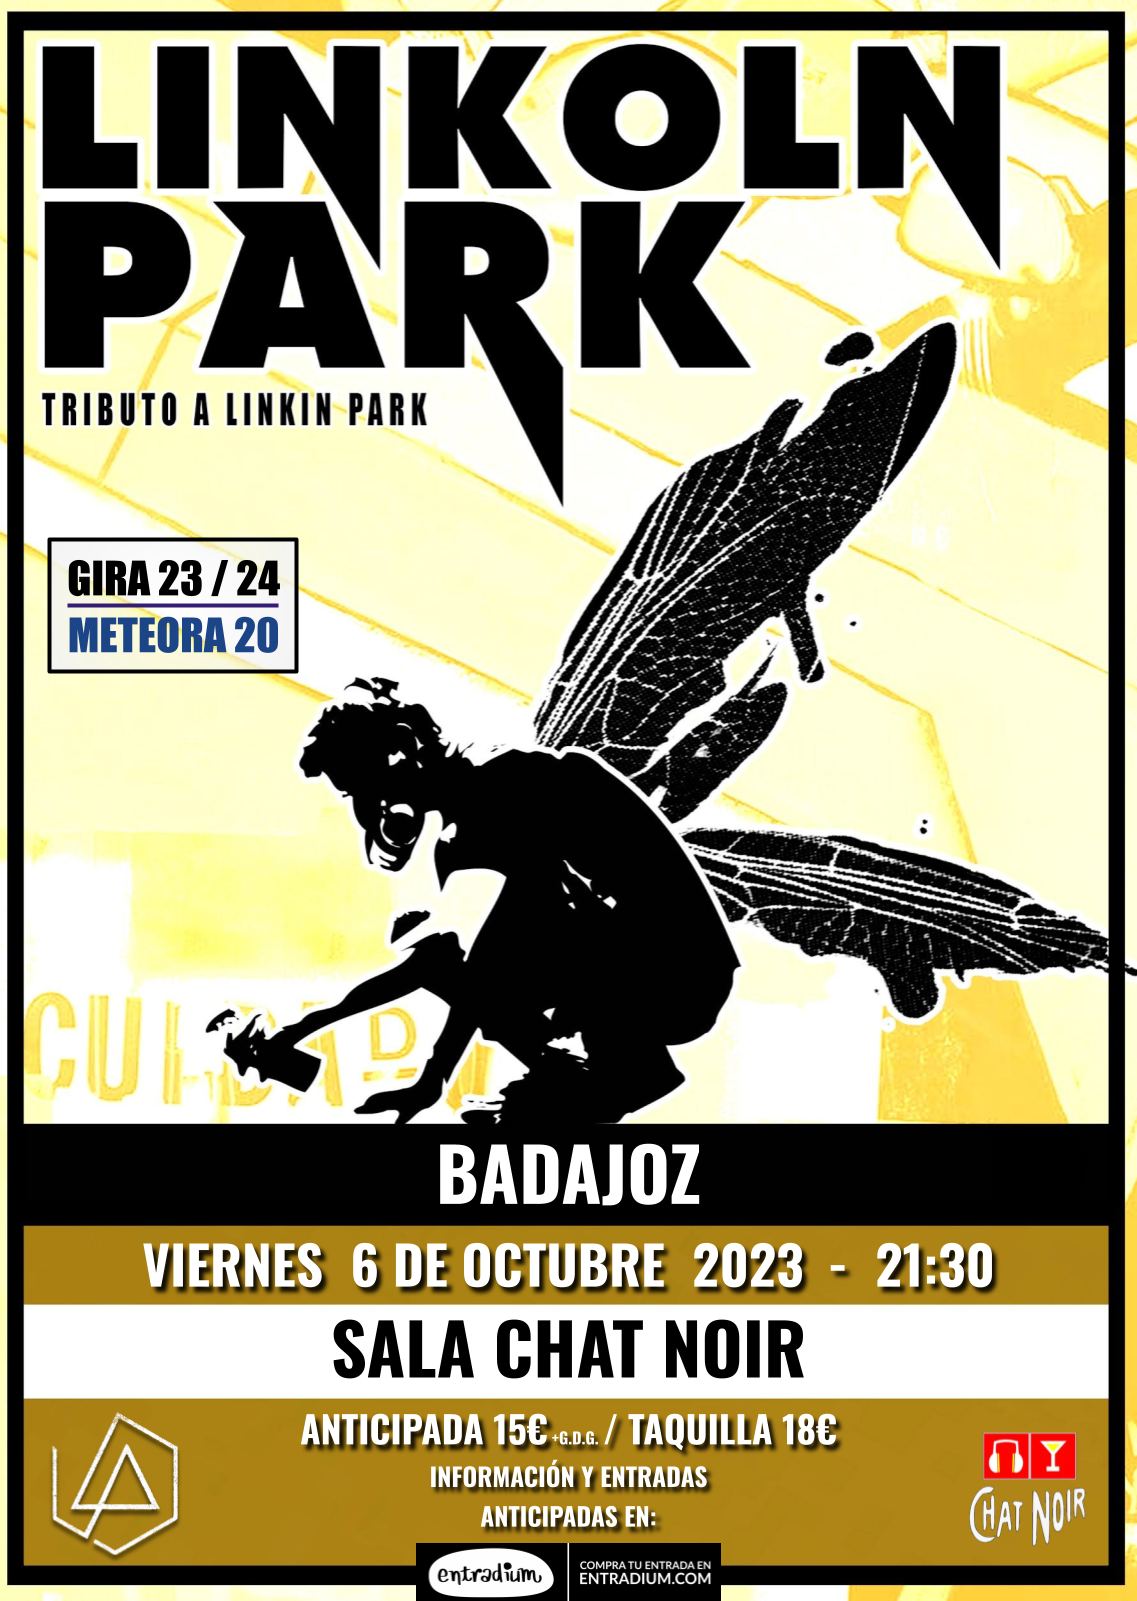 Linkoln Park (Tributo a Linkin Park) en BADAJOZ - 2023